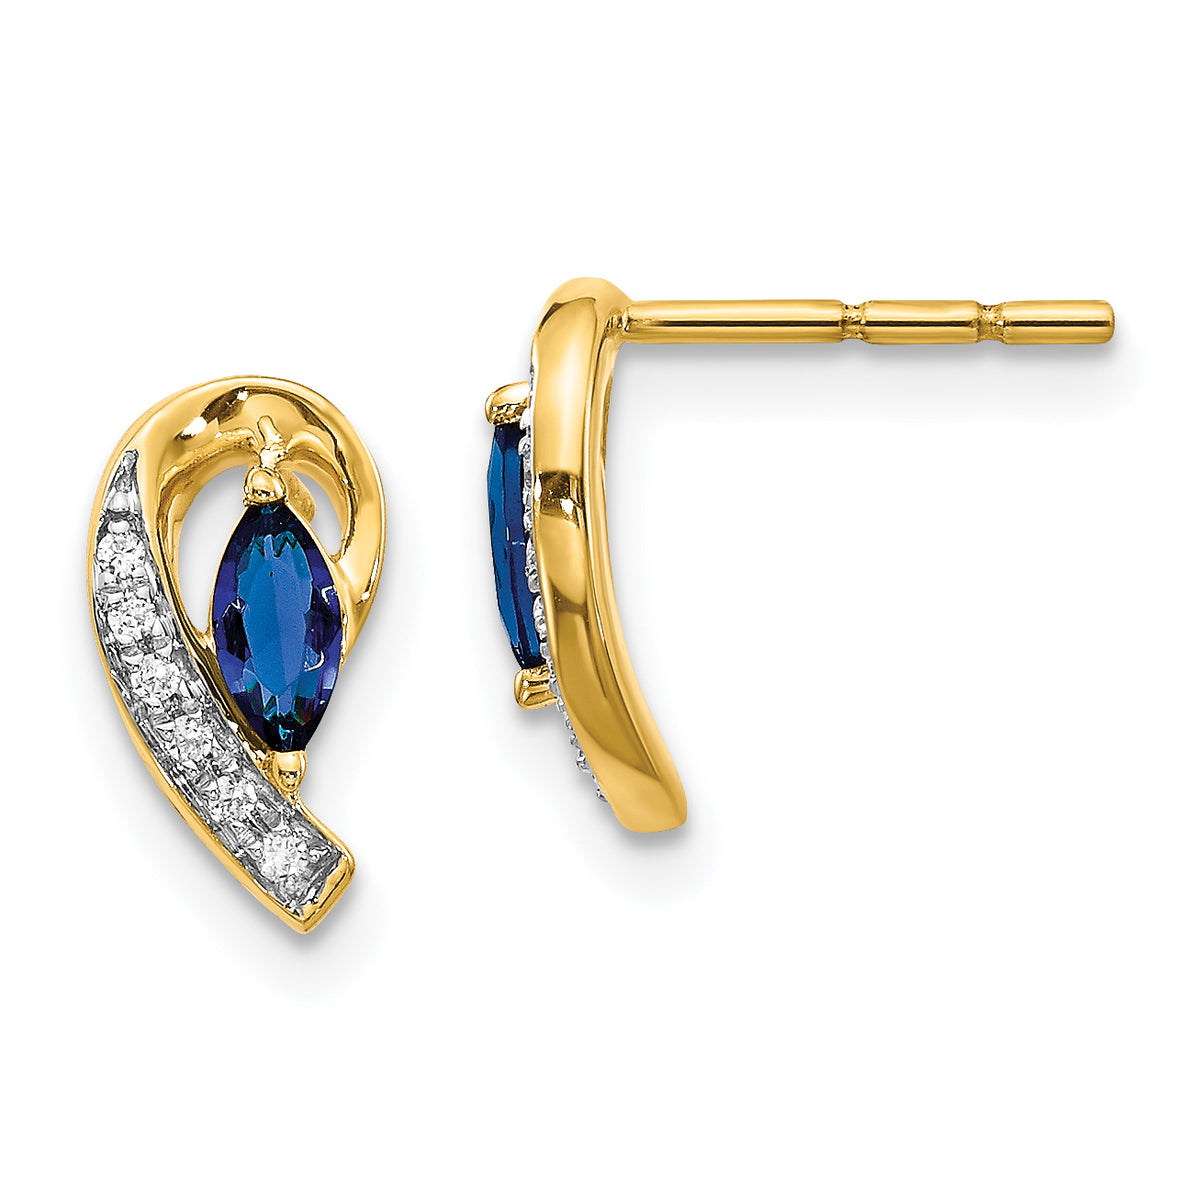 10k Yellow Gold Diamond and Sapphire Earrings